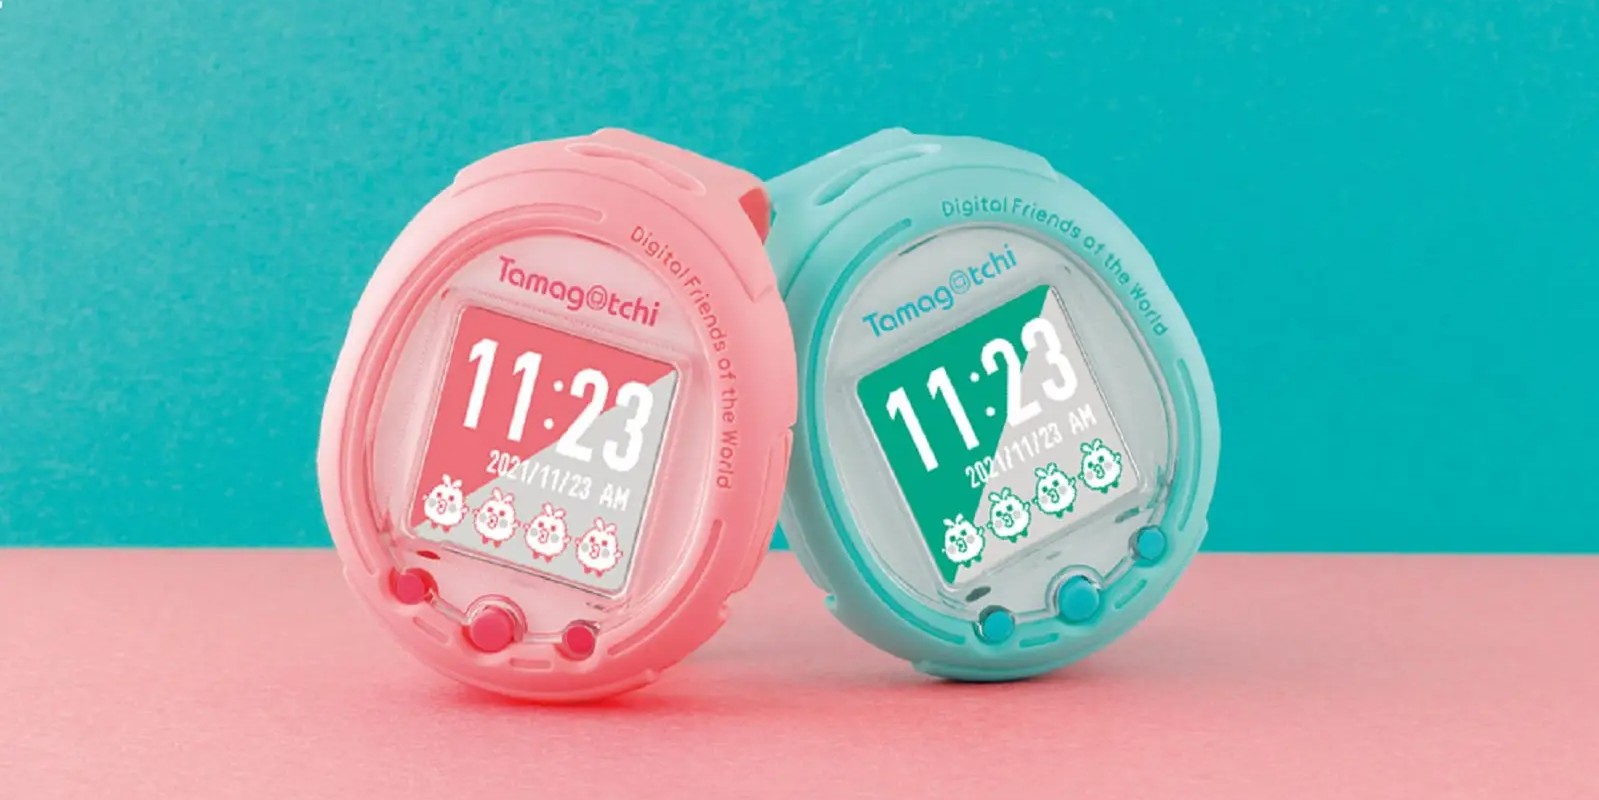 Tamagotchi Smart watch celebrates 25 years of kids accidentally killing